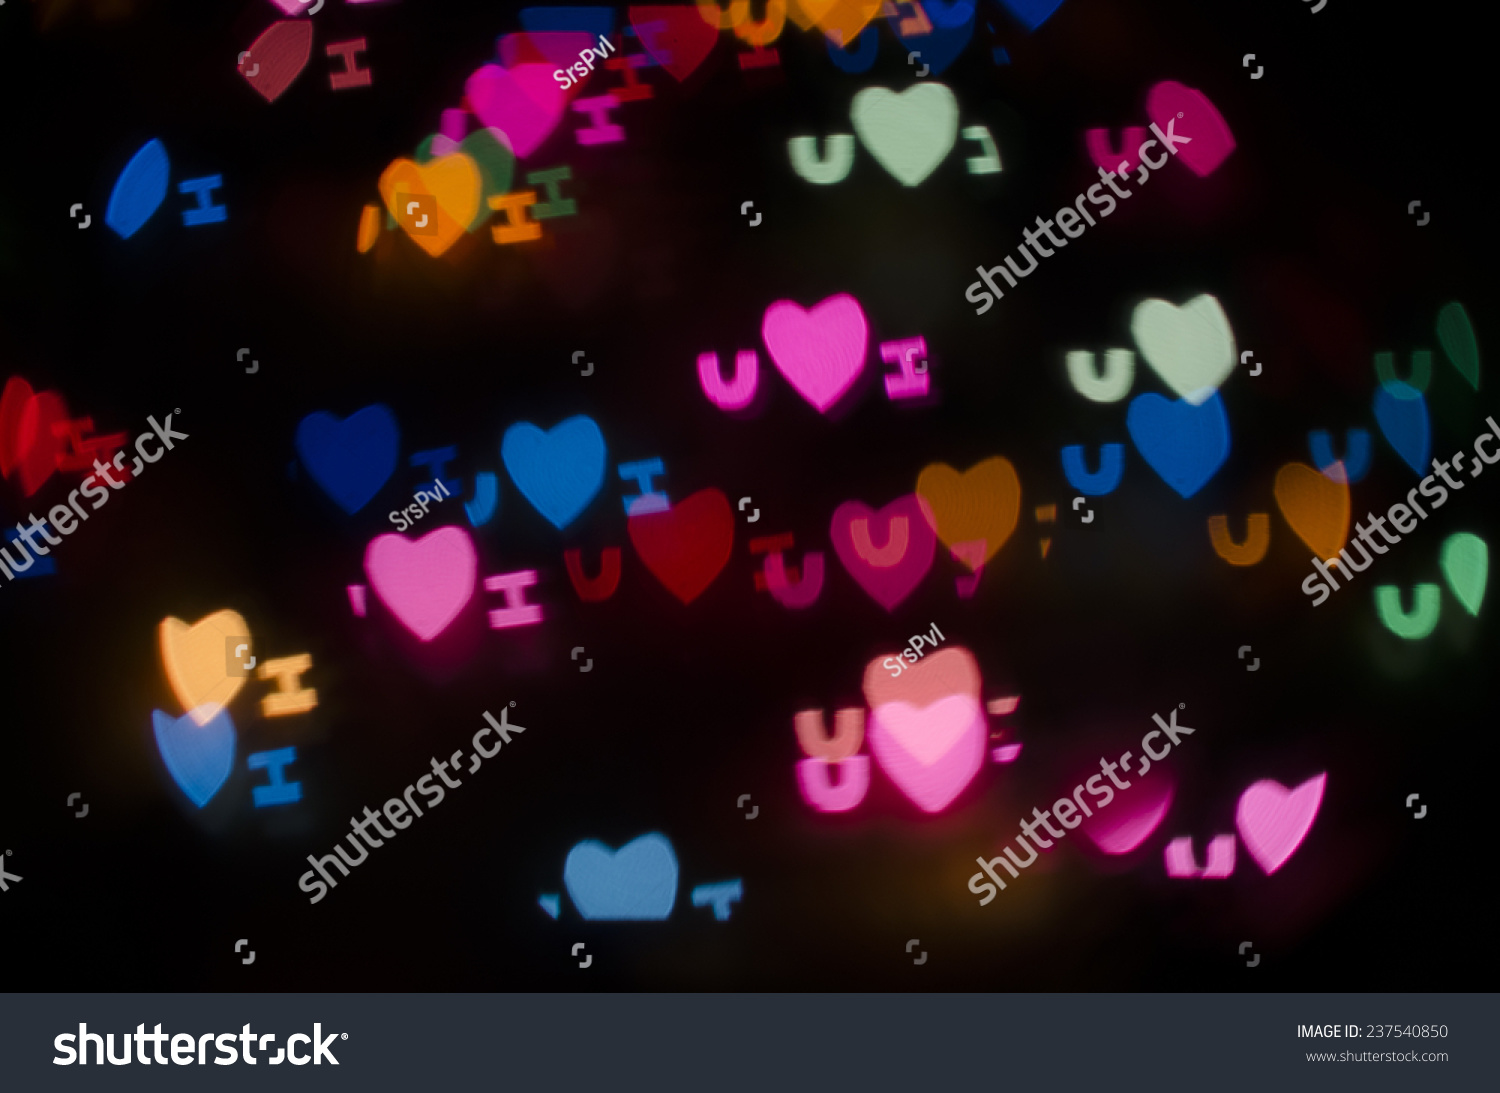 Love Bokeh Background Stock Photo 237540850 - Shutterstock